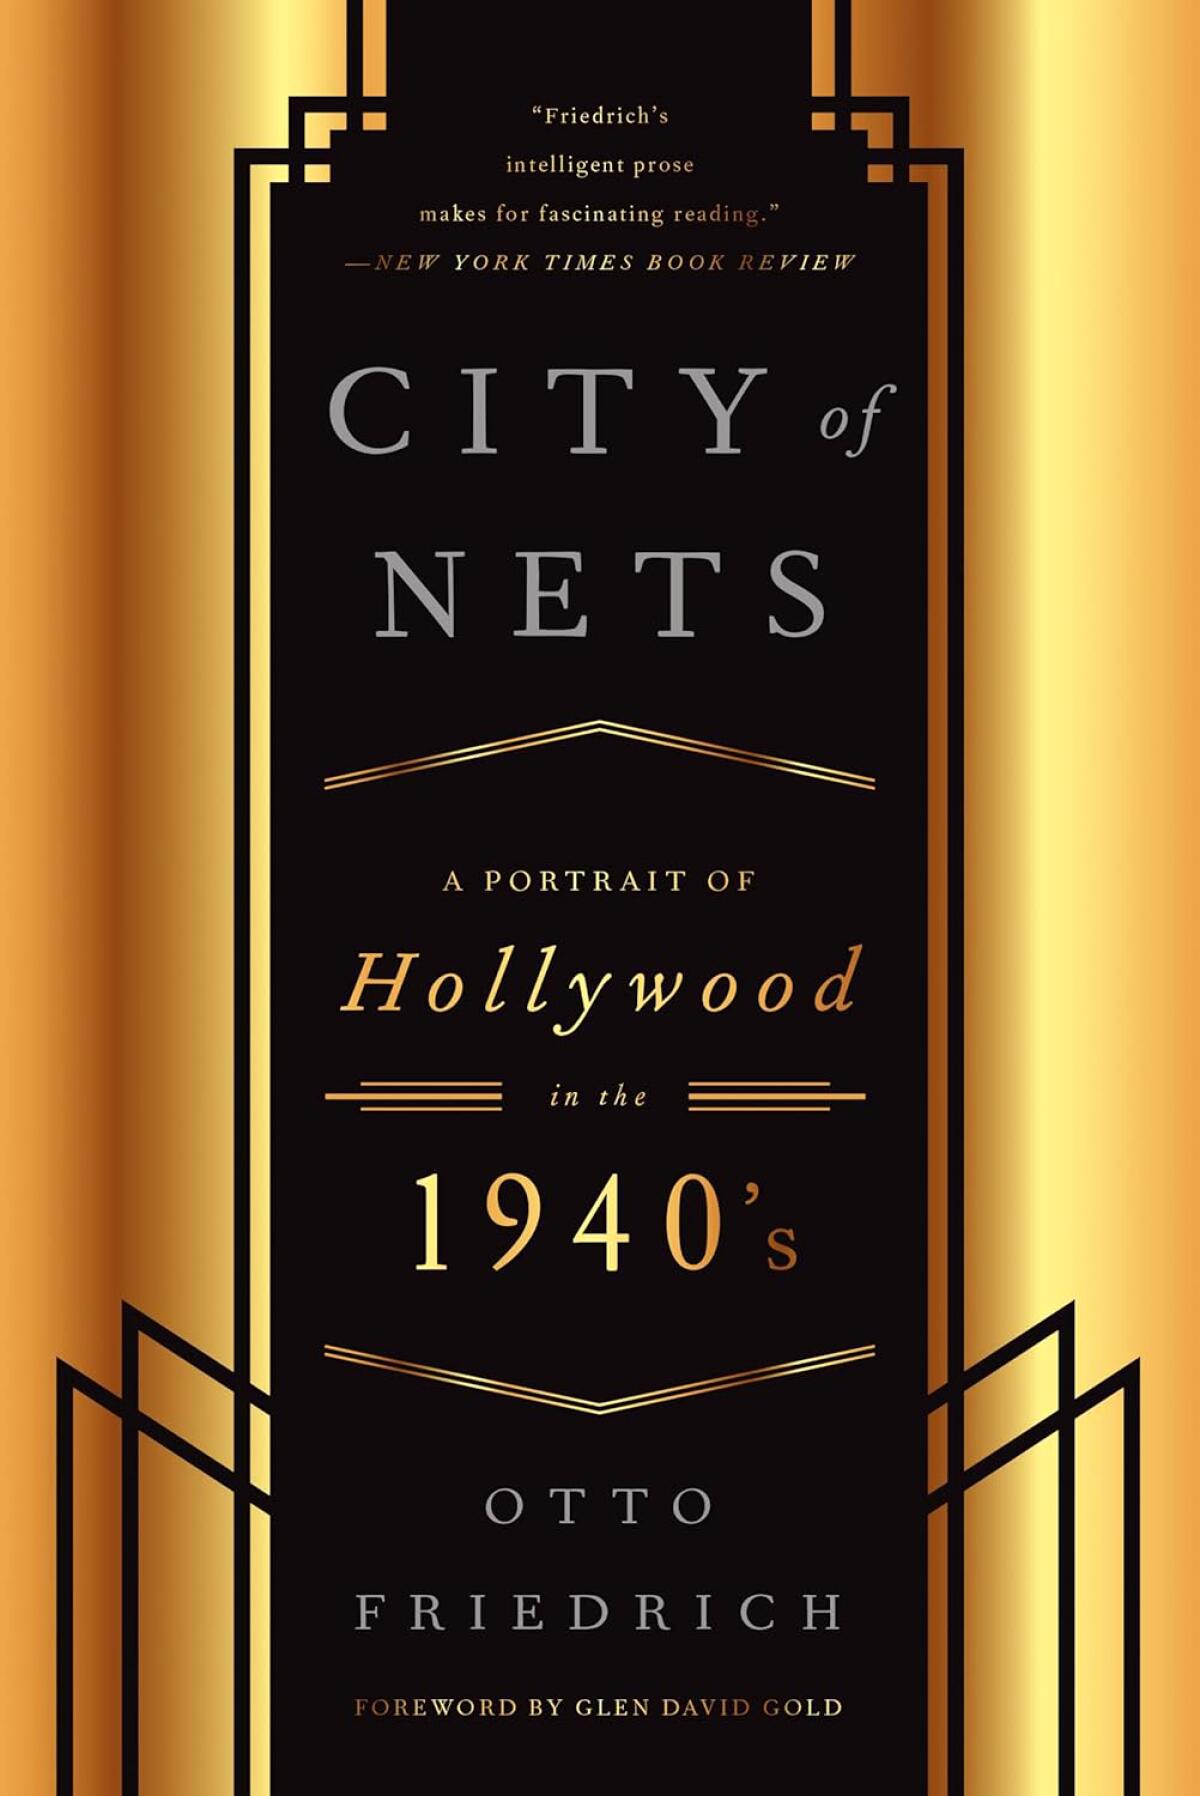 "City of Nets" by Otto Friedrich, 1986